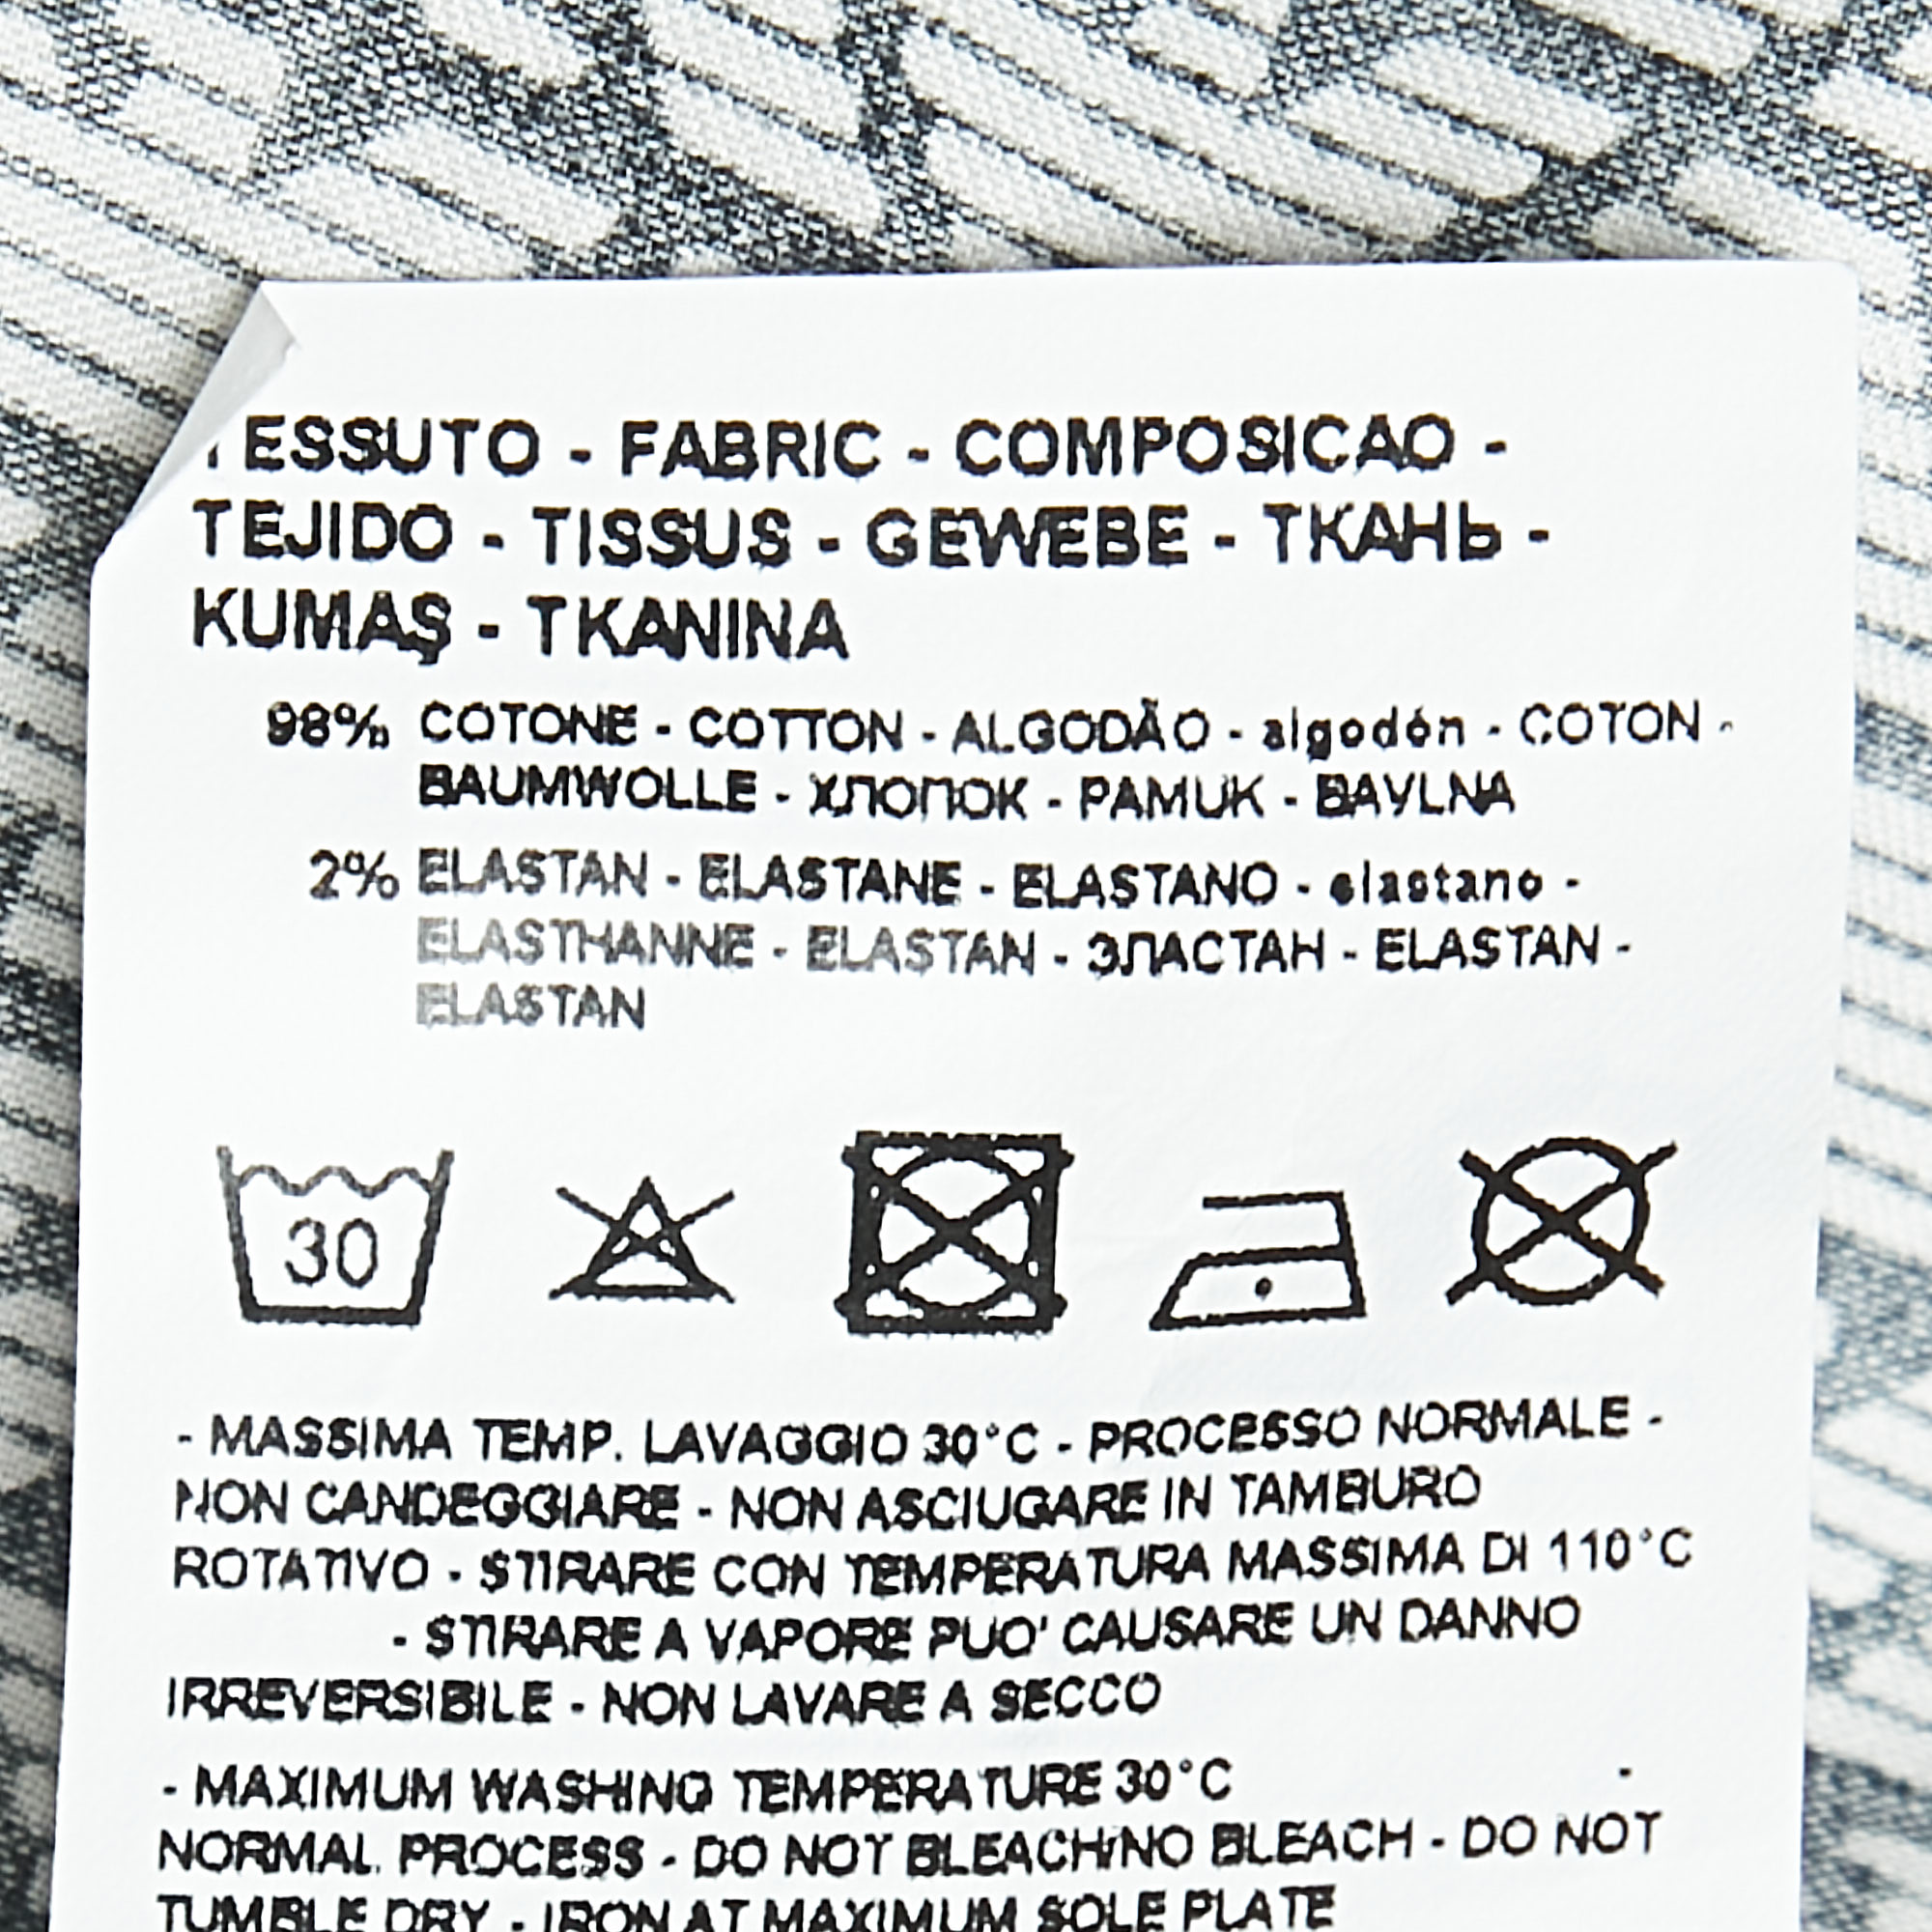 Emporio Armani Black Logo Printed Cotton Long Sleeve Shirt 2XL